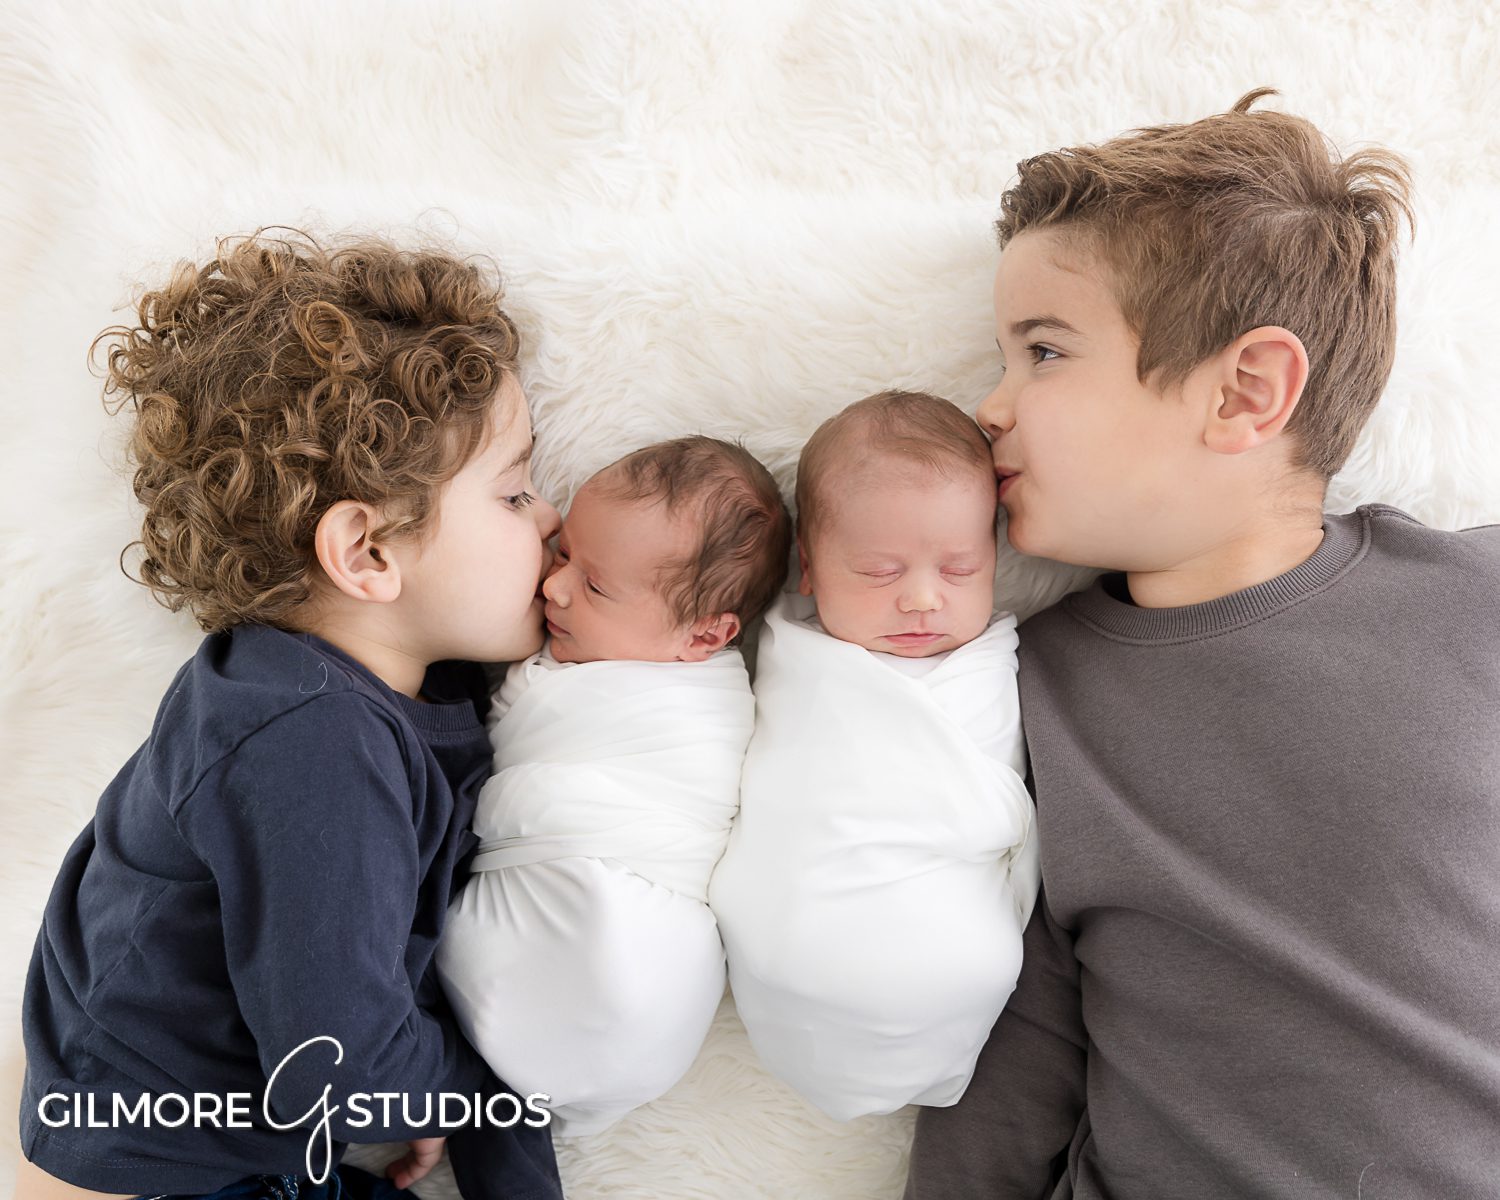 Twin Newborn baby boys, Gilmore Studios Newborn Photography studio, Newport Beach, CA - Orange County children's photographer